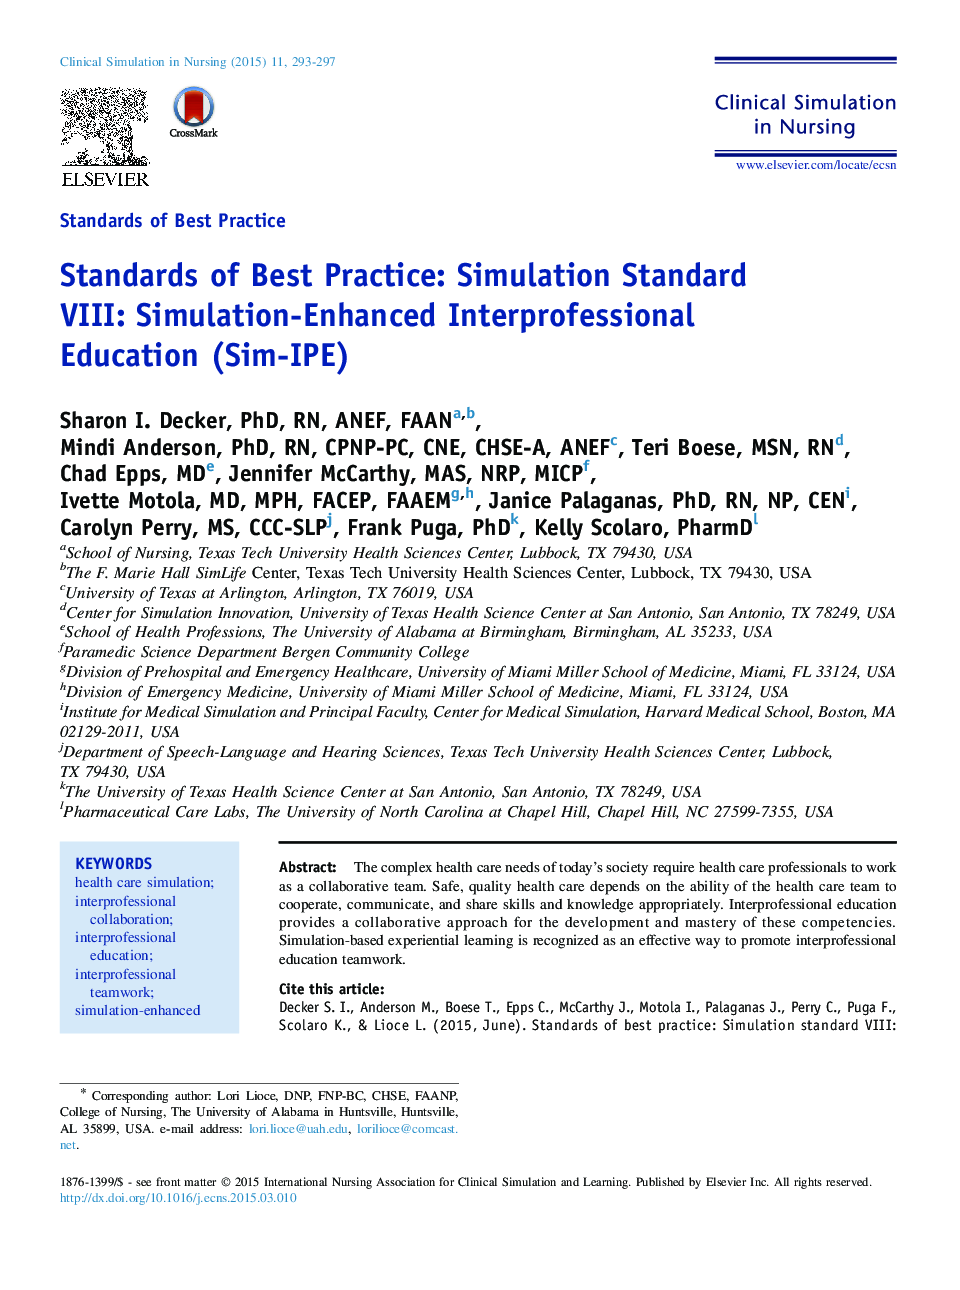 Standards of Best Practice: Simulation Standard VIII: Simulation-Enhanced Interprofessional Education (Sim-IPE) 